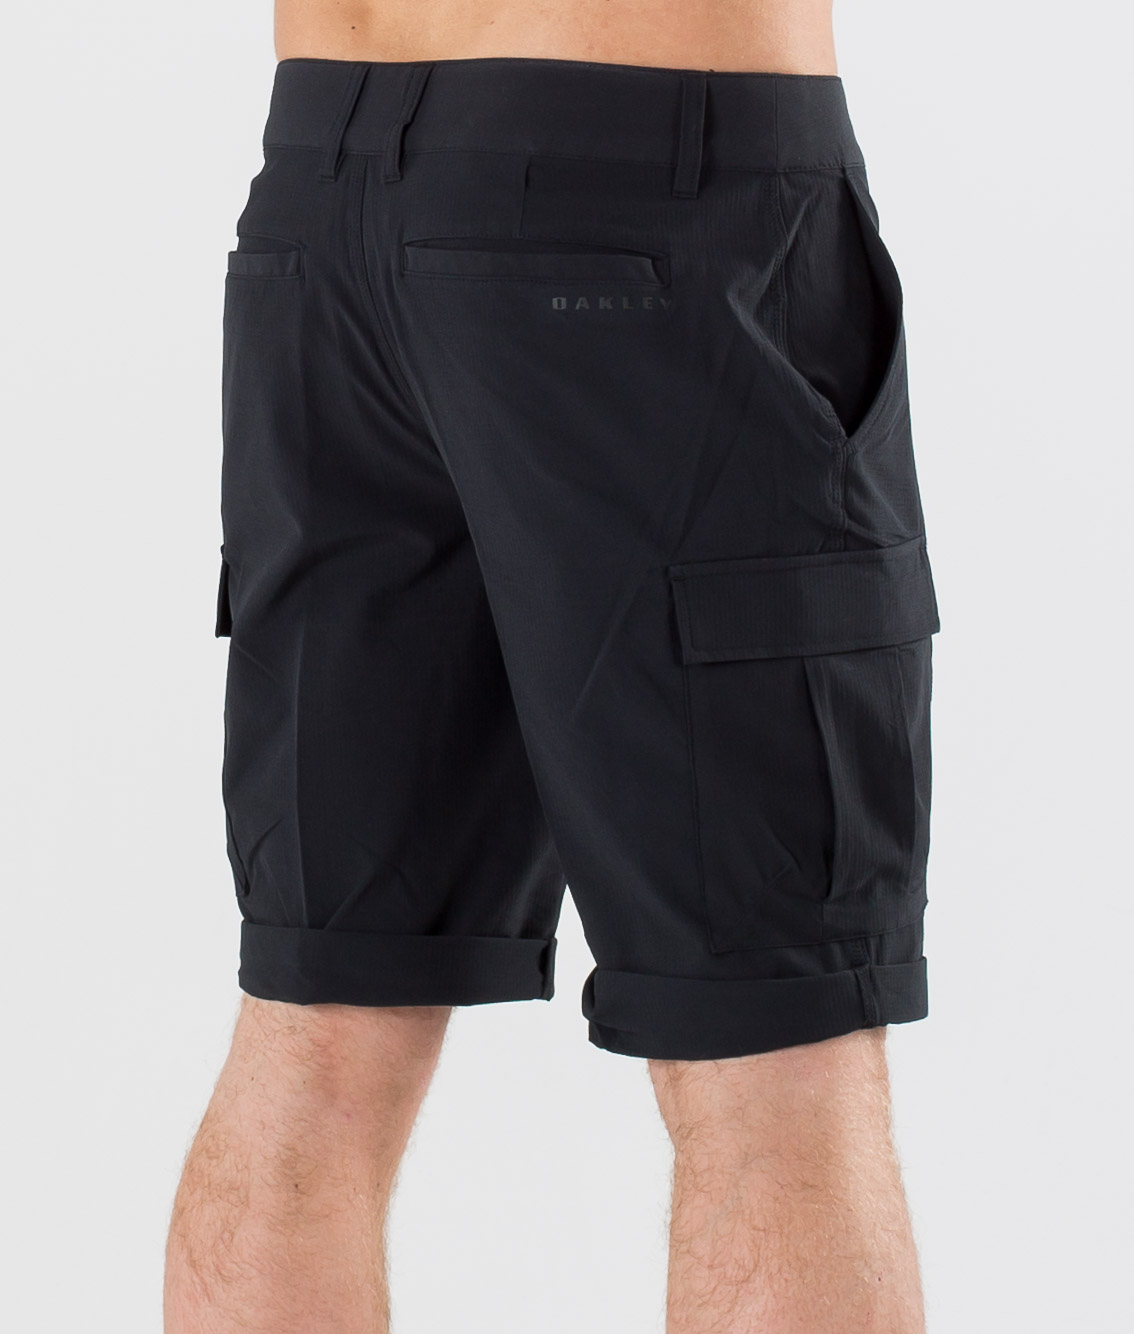 oakley shorts